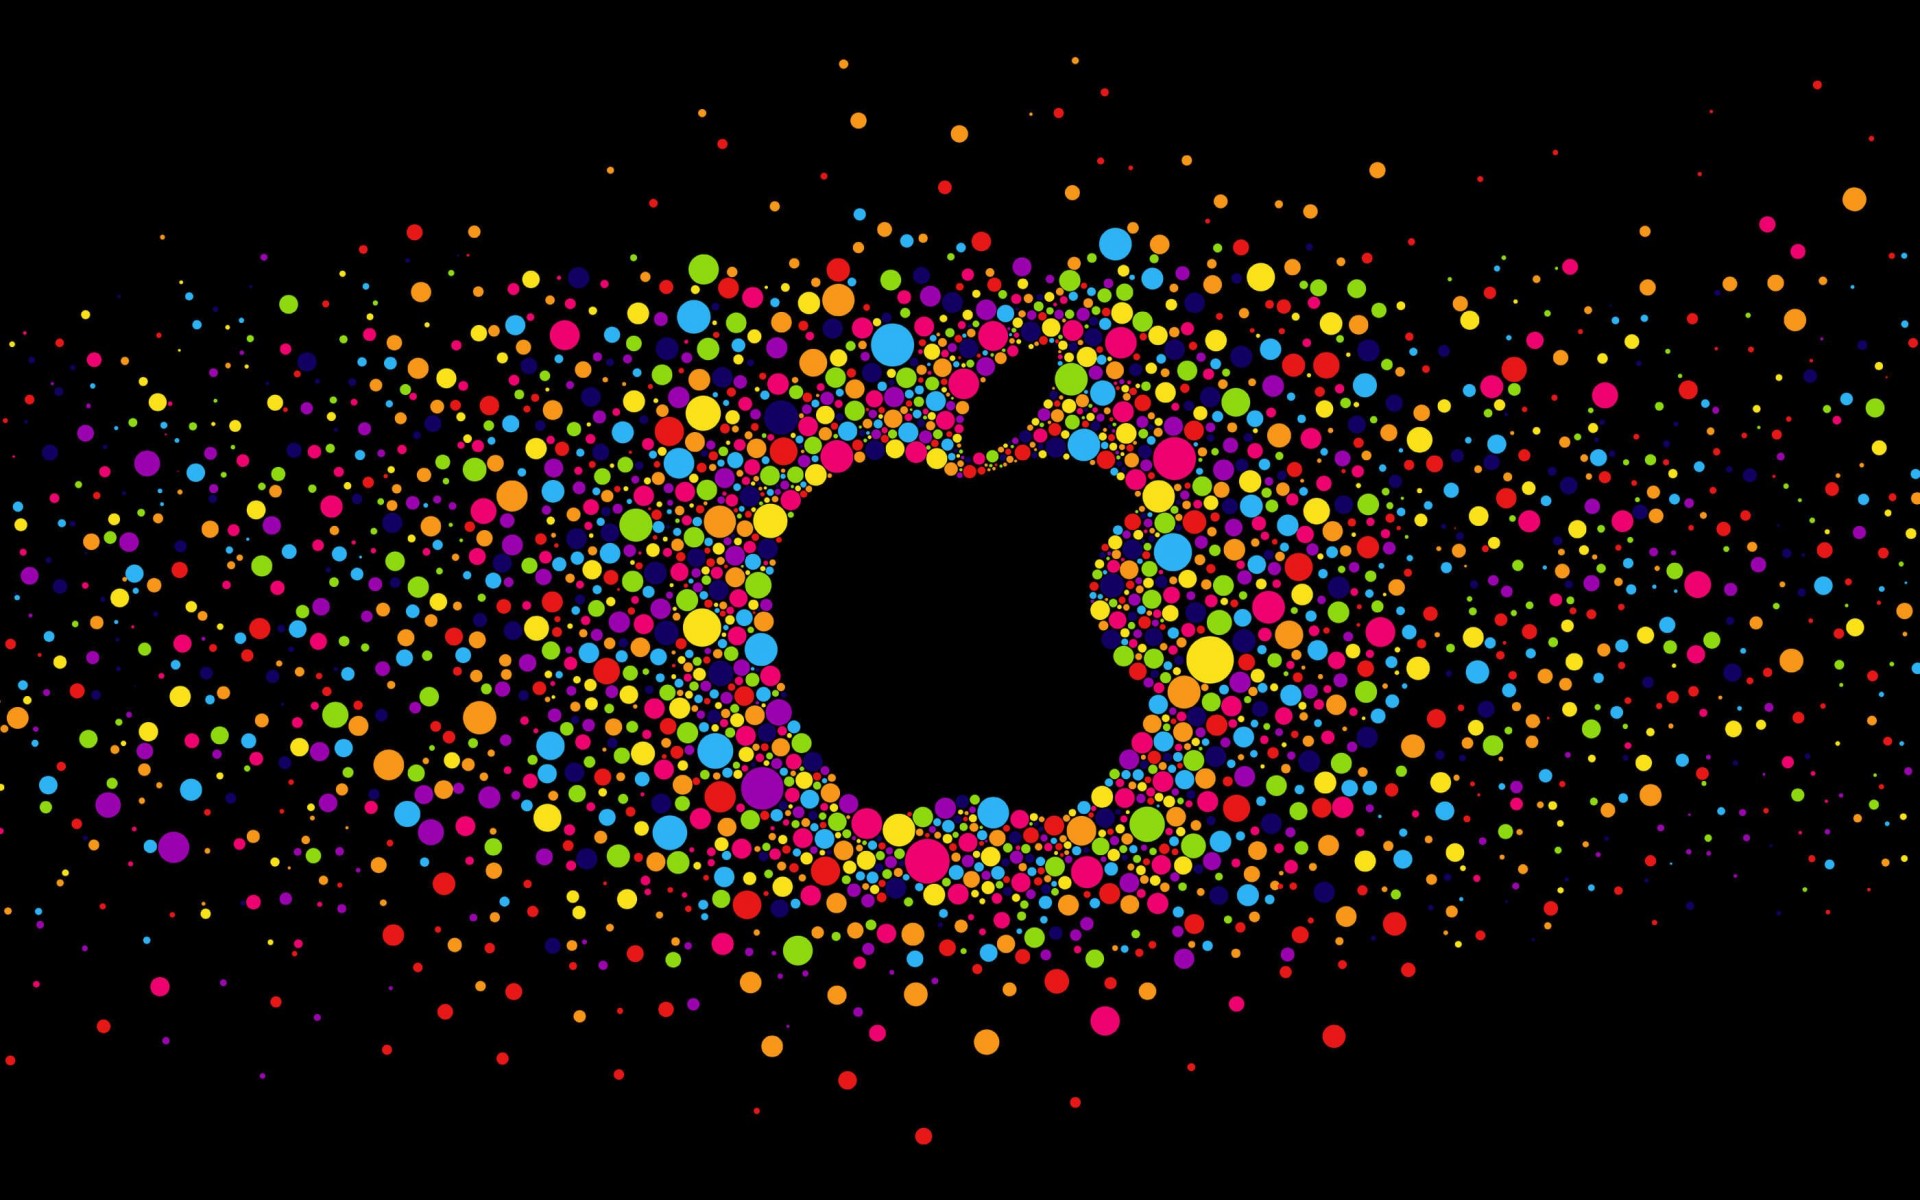 Black Apple Logo Particles Wallpaper for Desktop 1920x1200